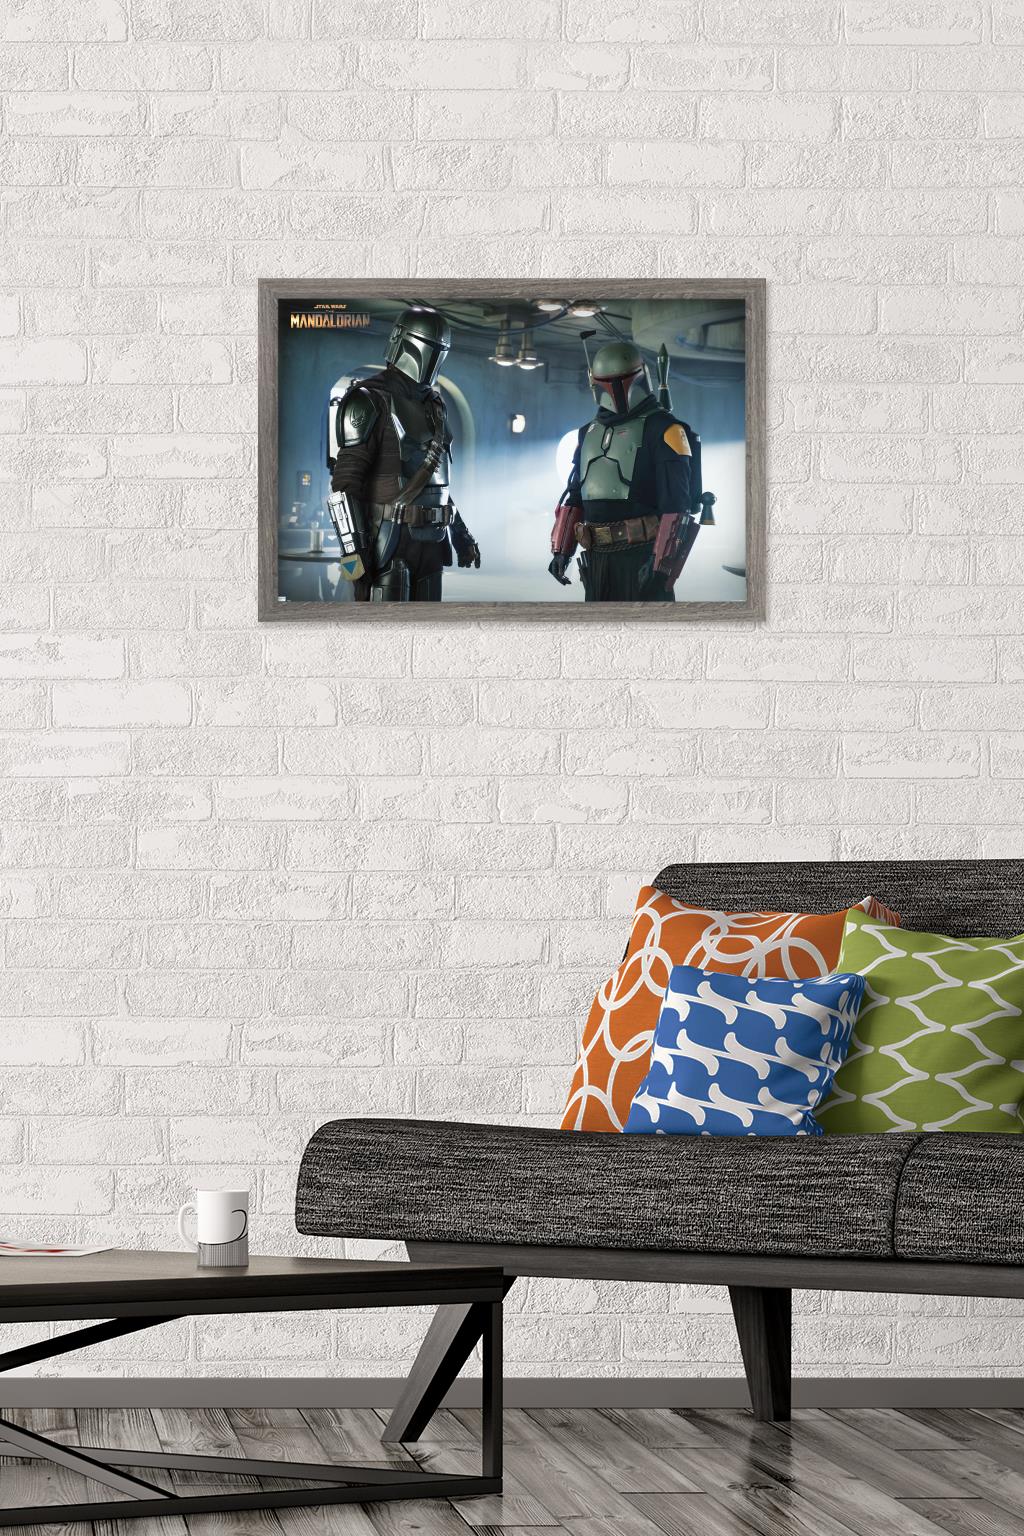 Star Wars: The Mandalorian Season 2 - Duo Wall Poster, 14.725" x 22.375", Framed - image 2 of 5